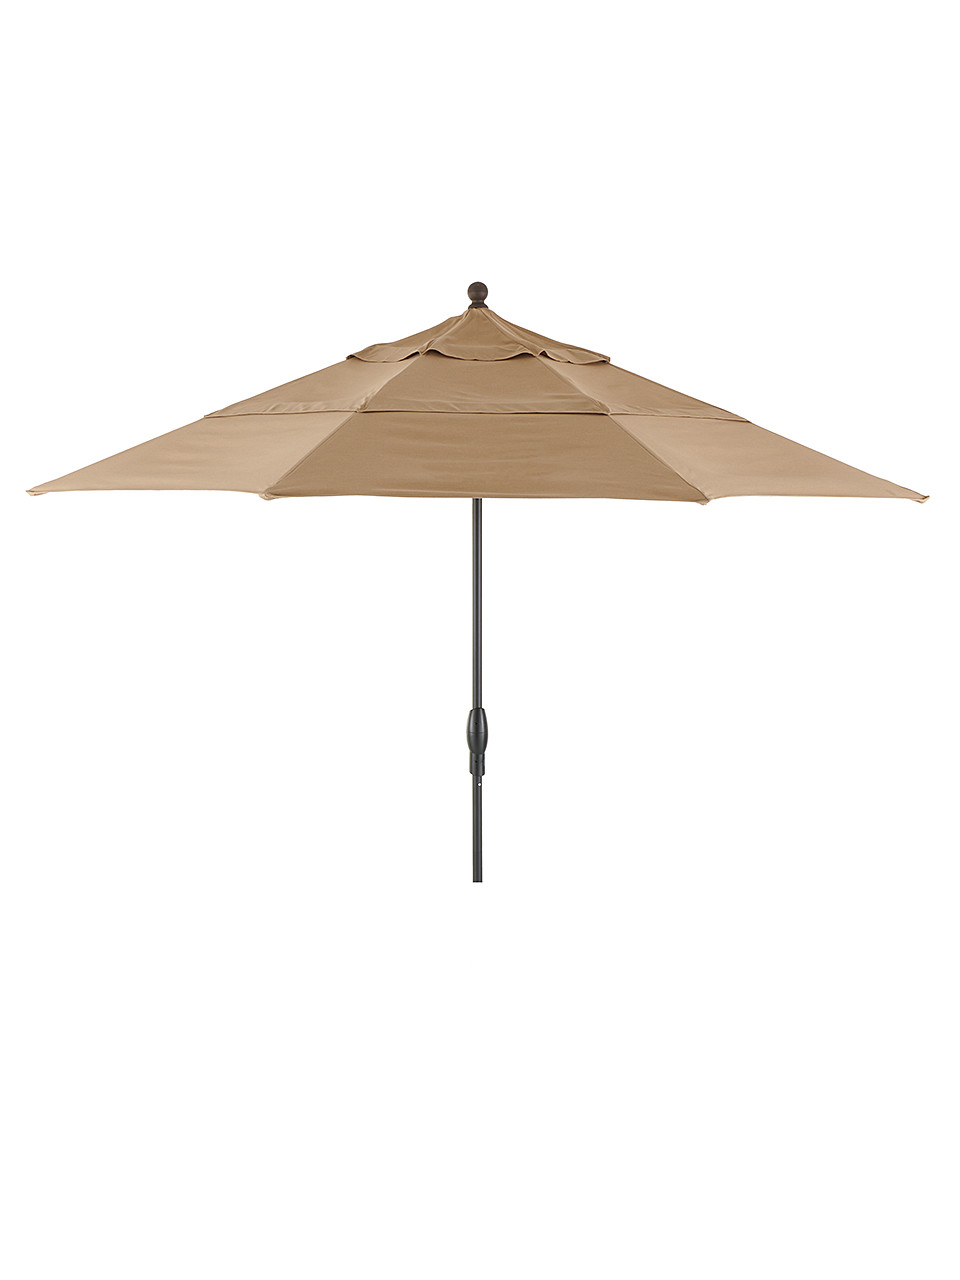 Treasure Garden 11 ft. Heather Beige Canopy and Black Aluminum Market Umbrella (UM812)